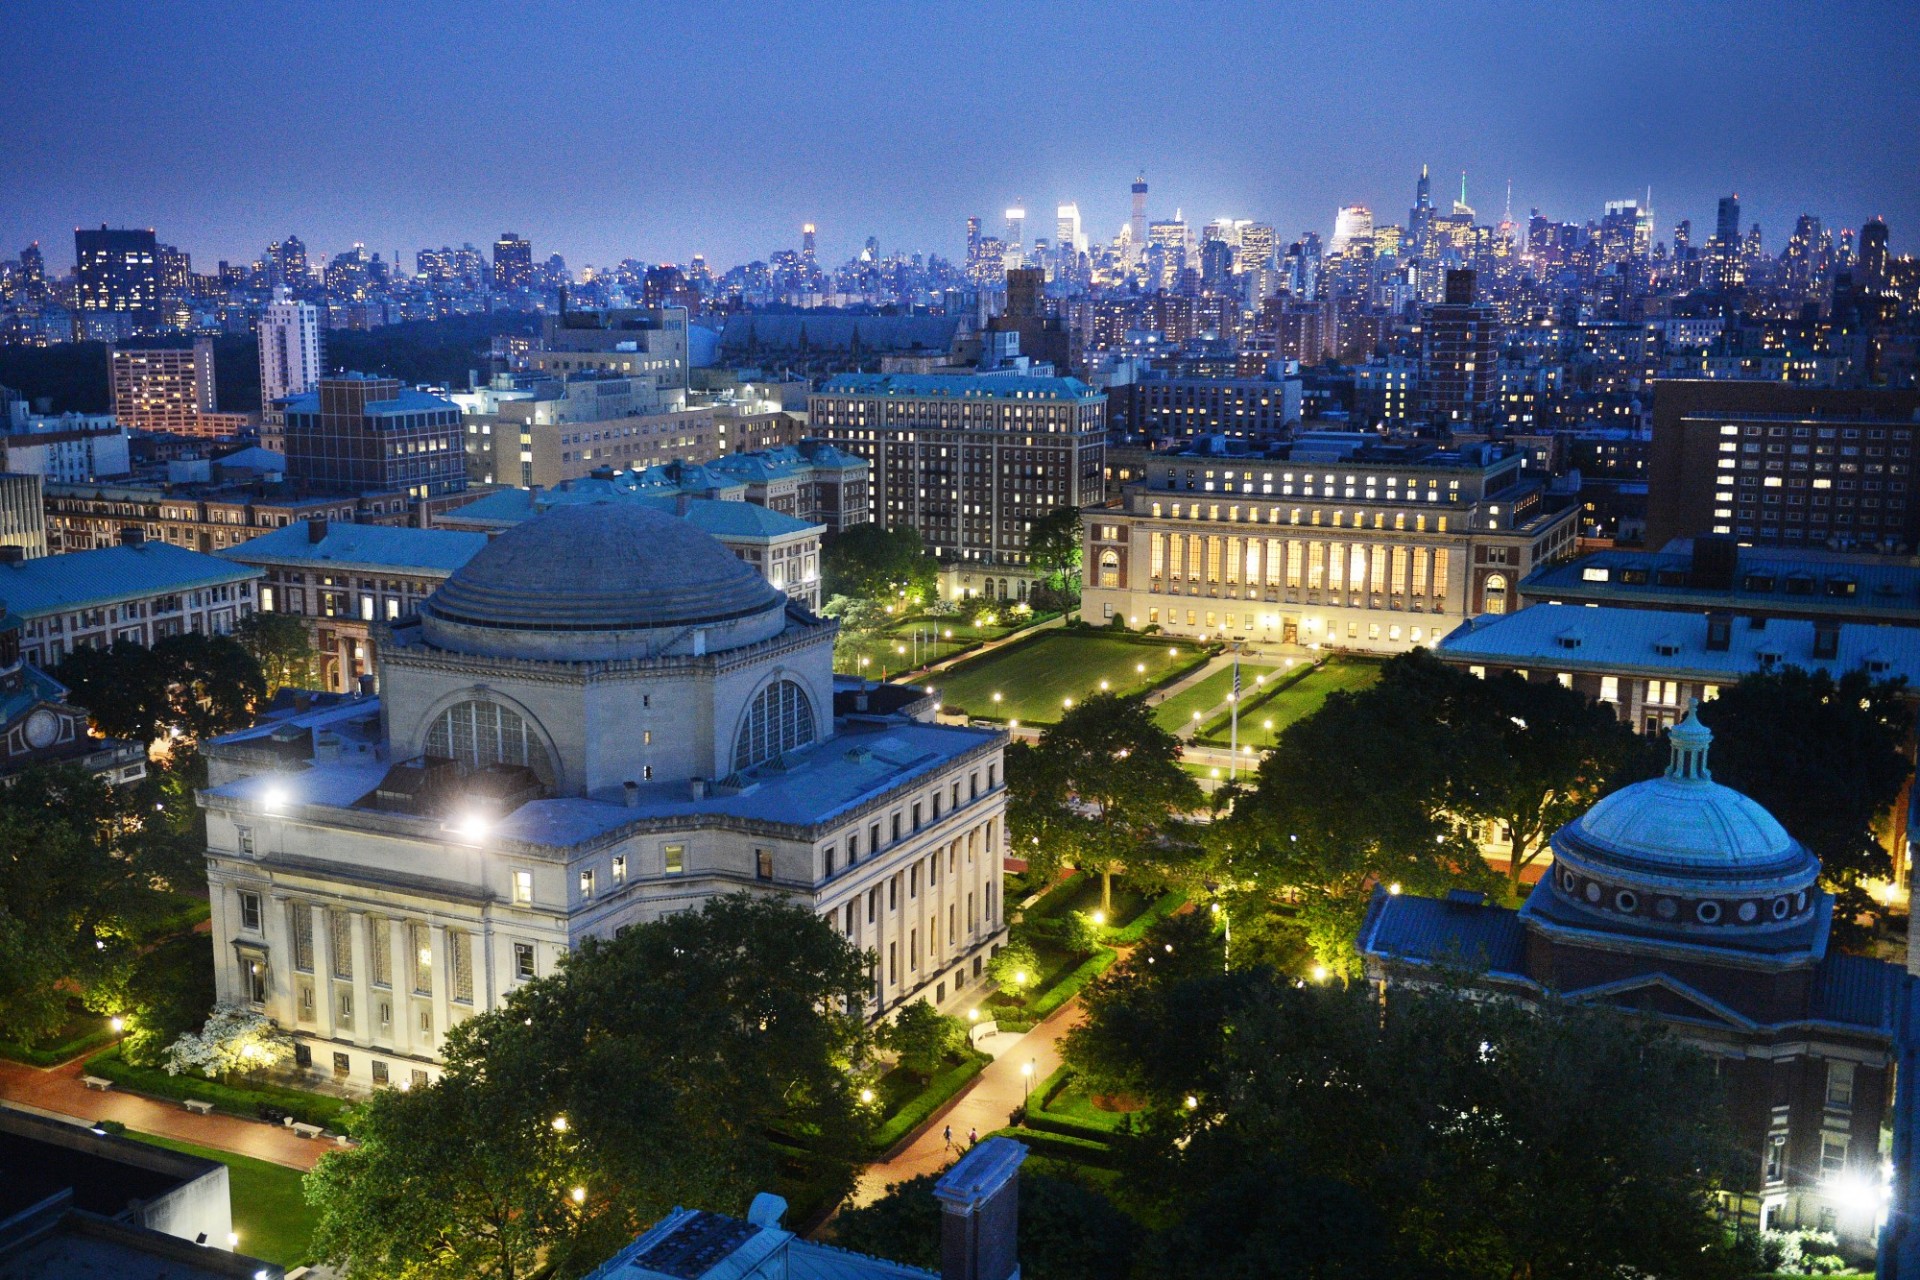 Columbia University campus at night